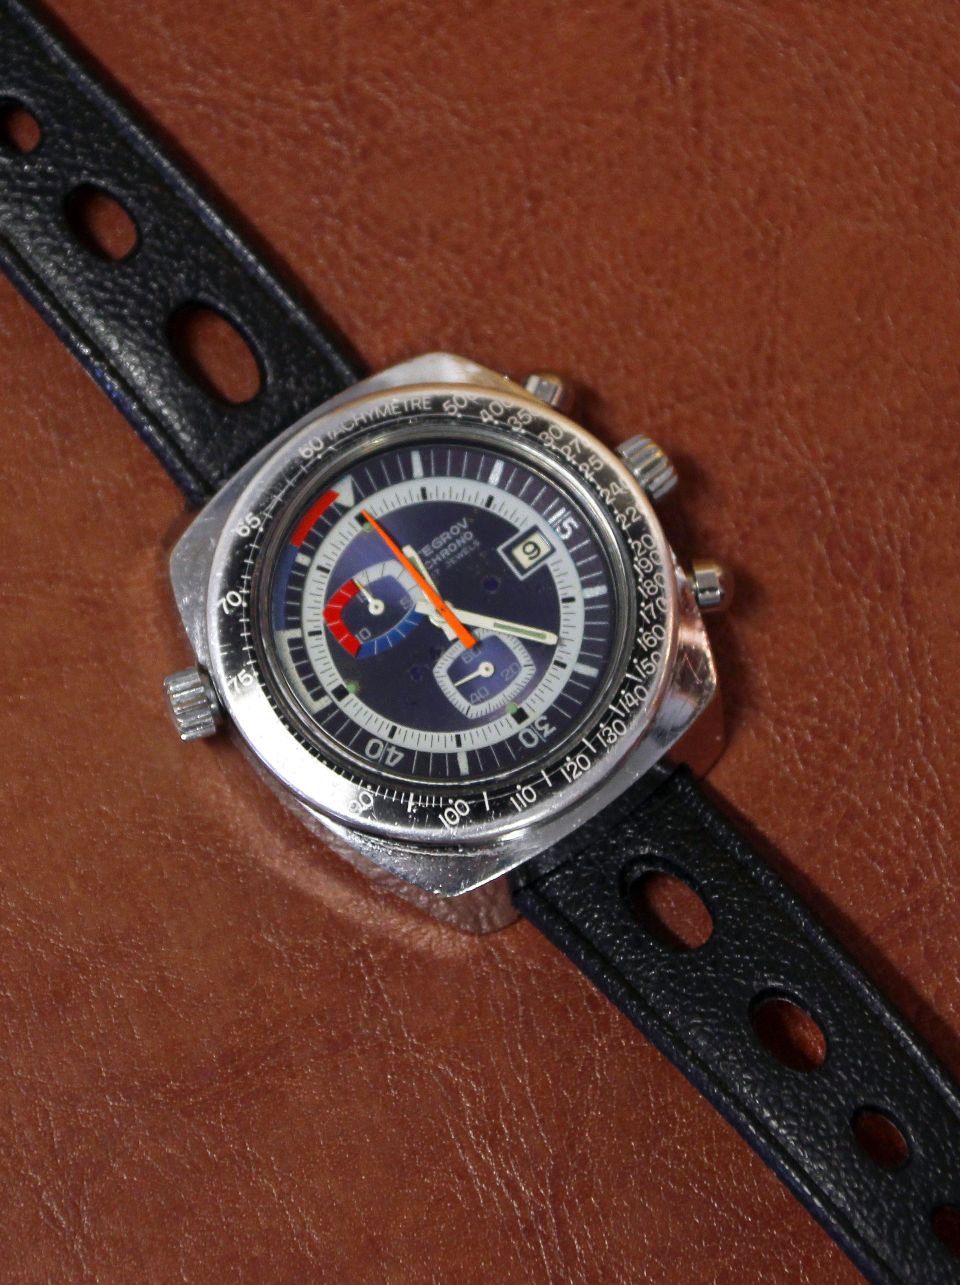 Vintage Tegrov chronograph rannekello 1970 luku